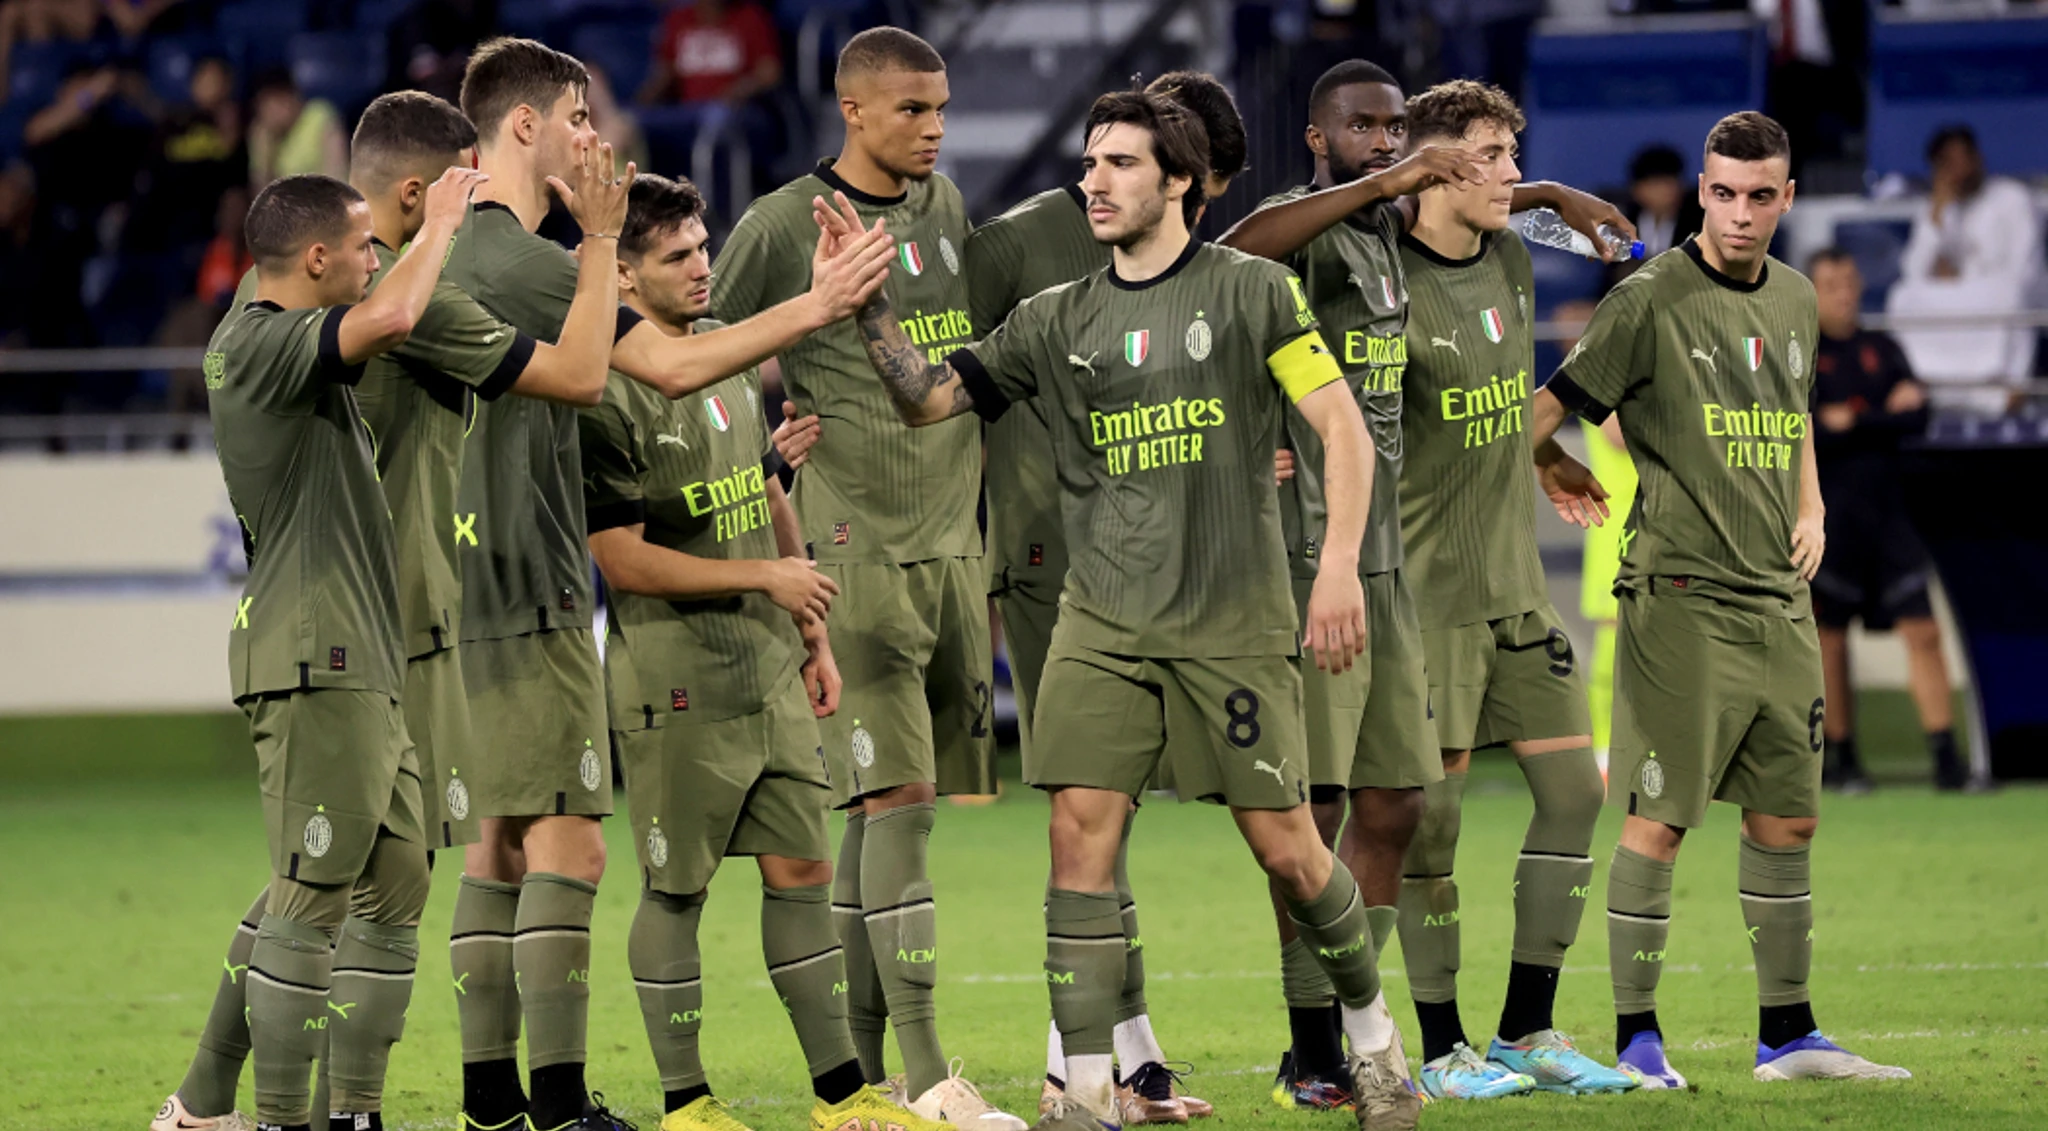 AC Milan score richer sponsorship deal with Emirates